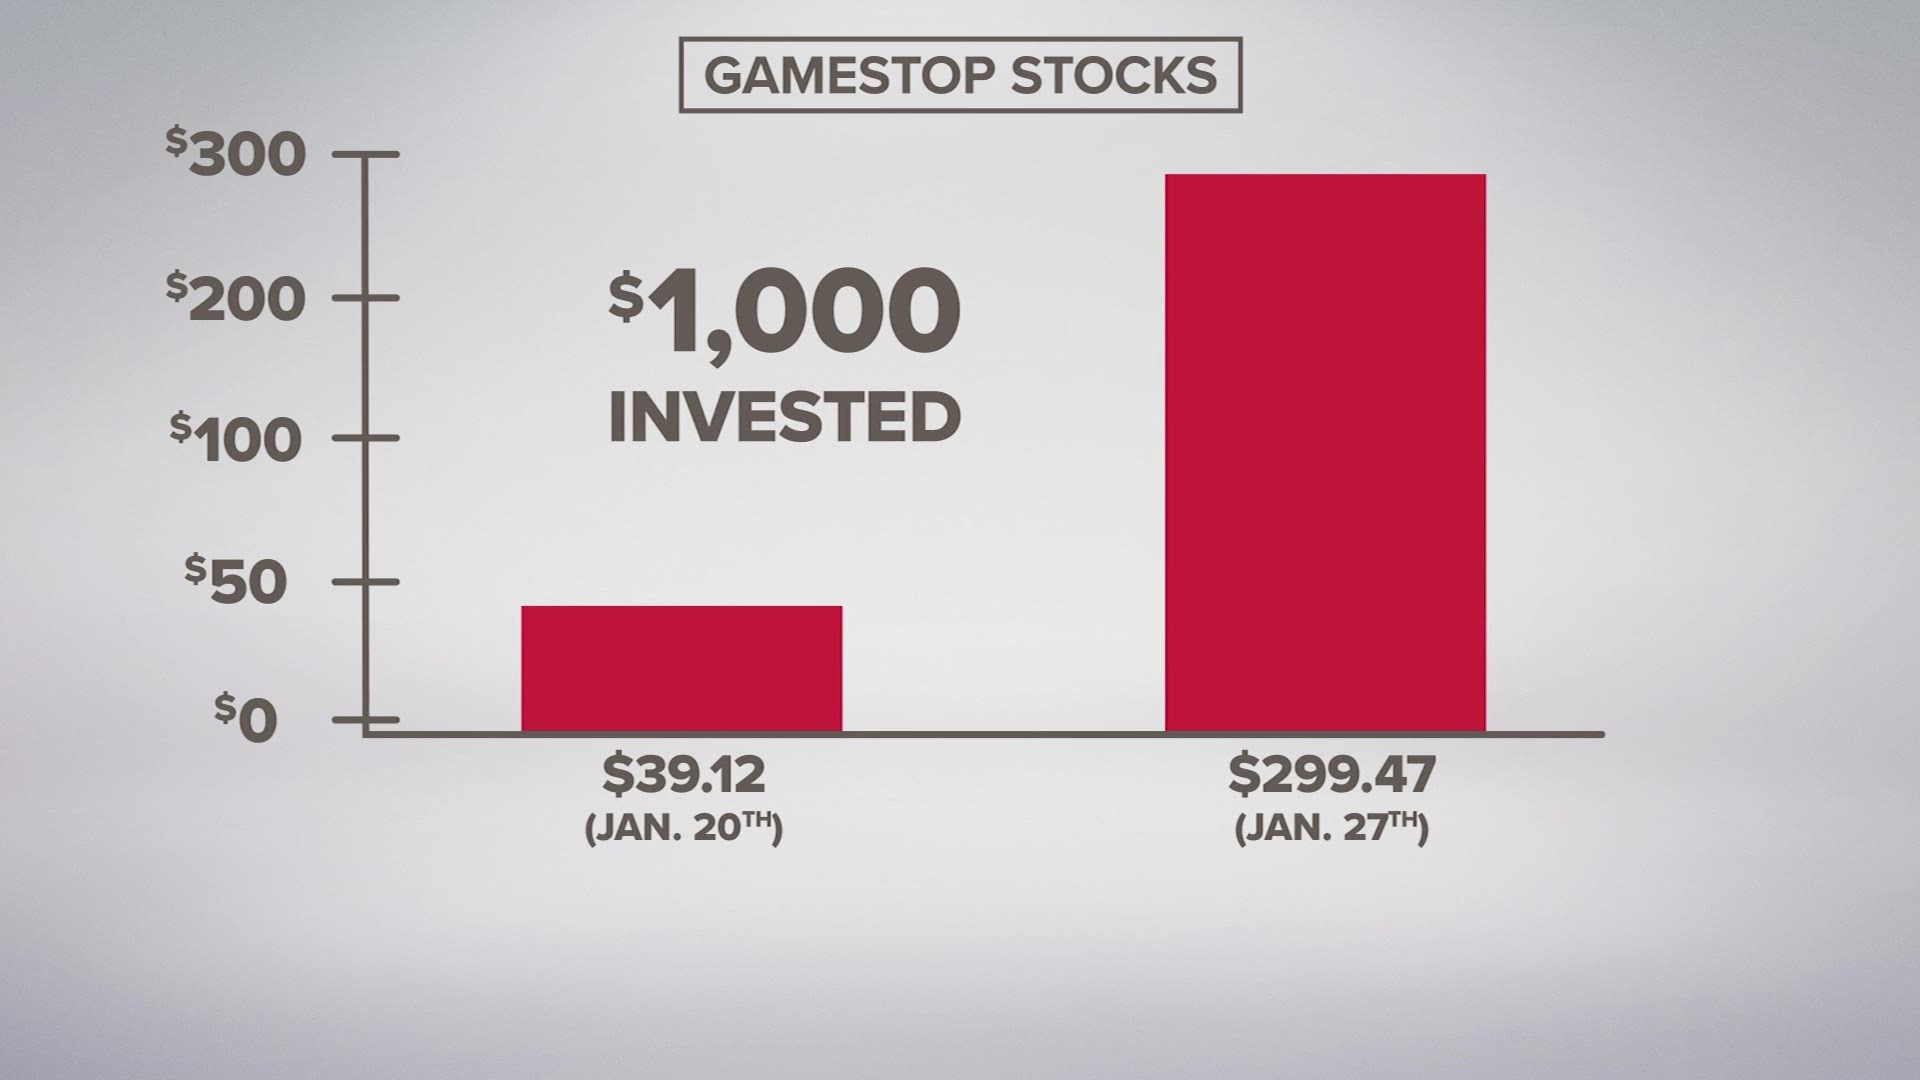 Houston investors hope to cash in on GameStop stock surge